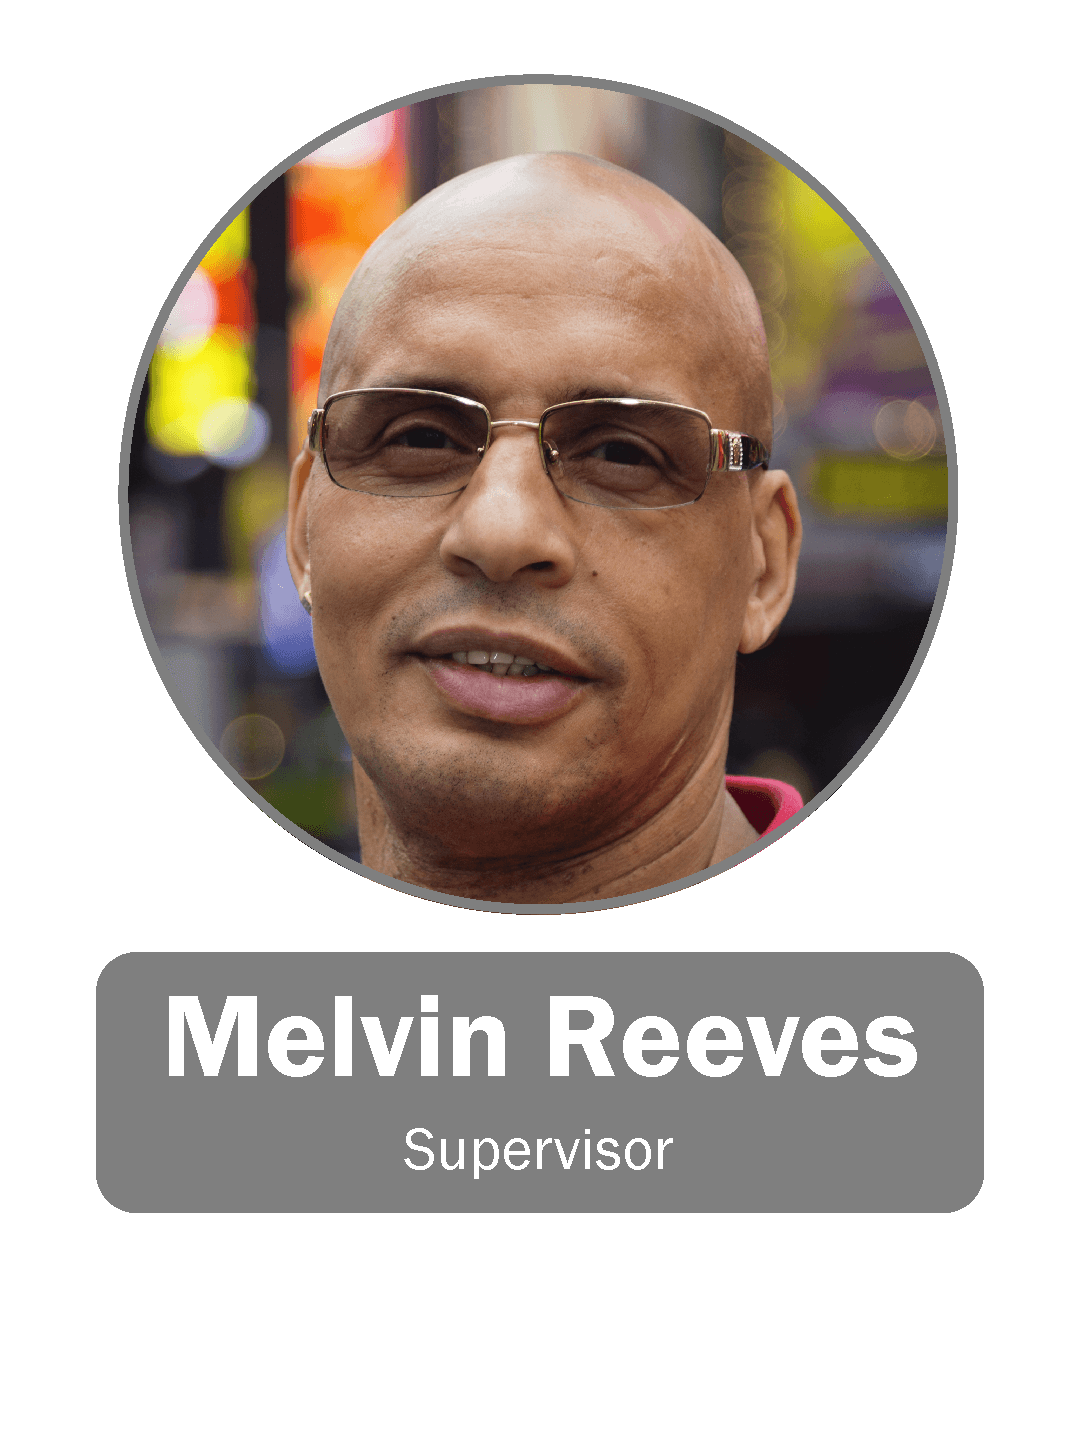 Melvin Reeves | Supervisor